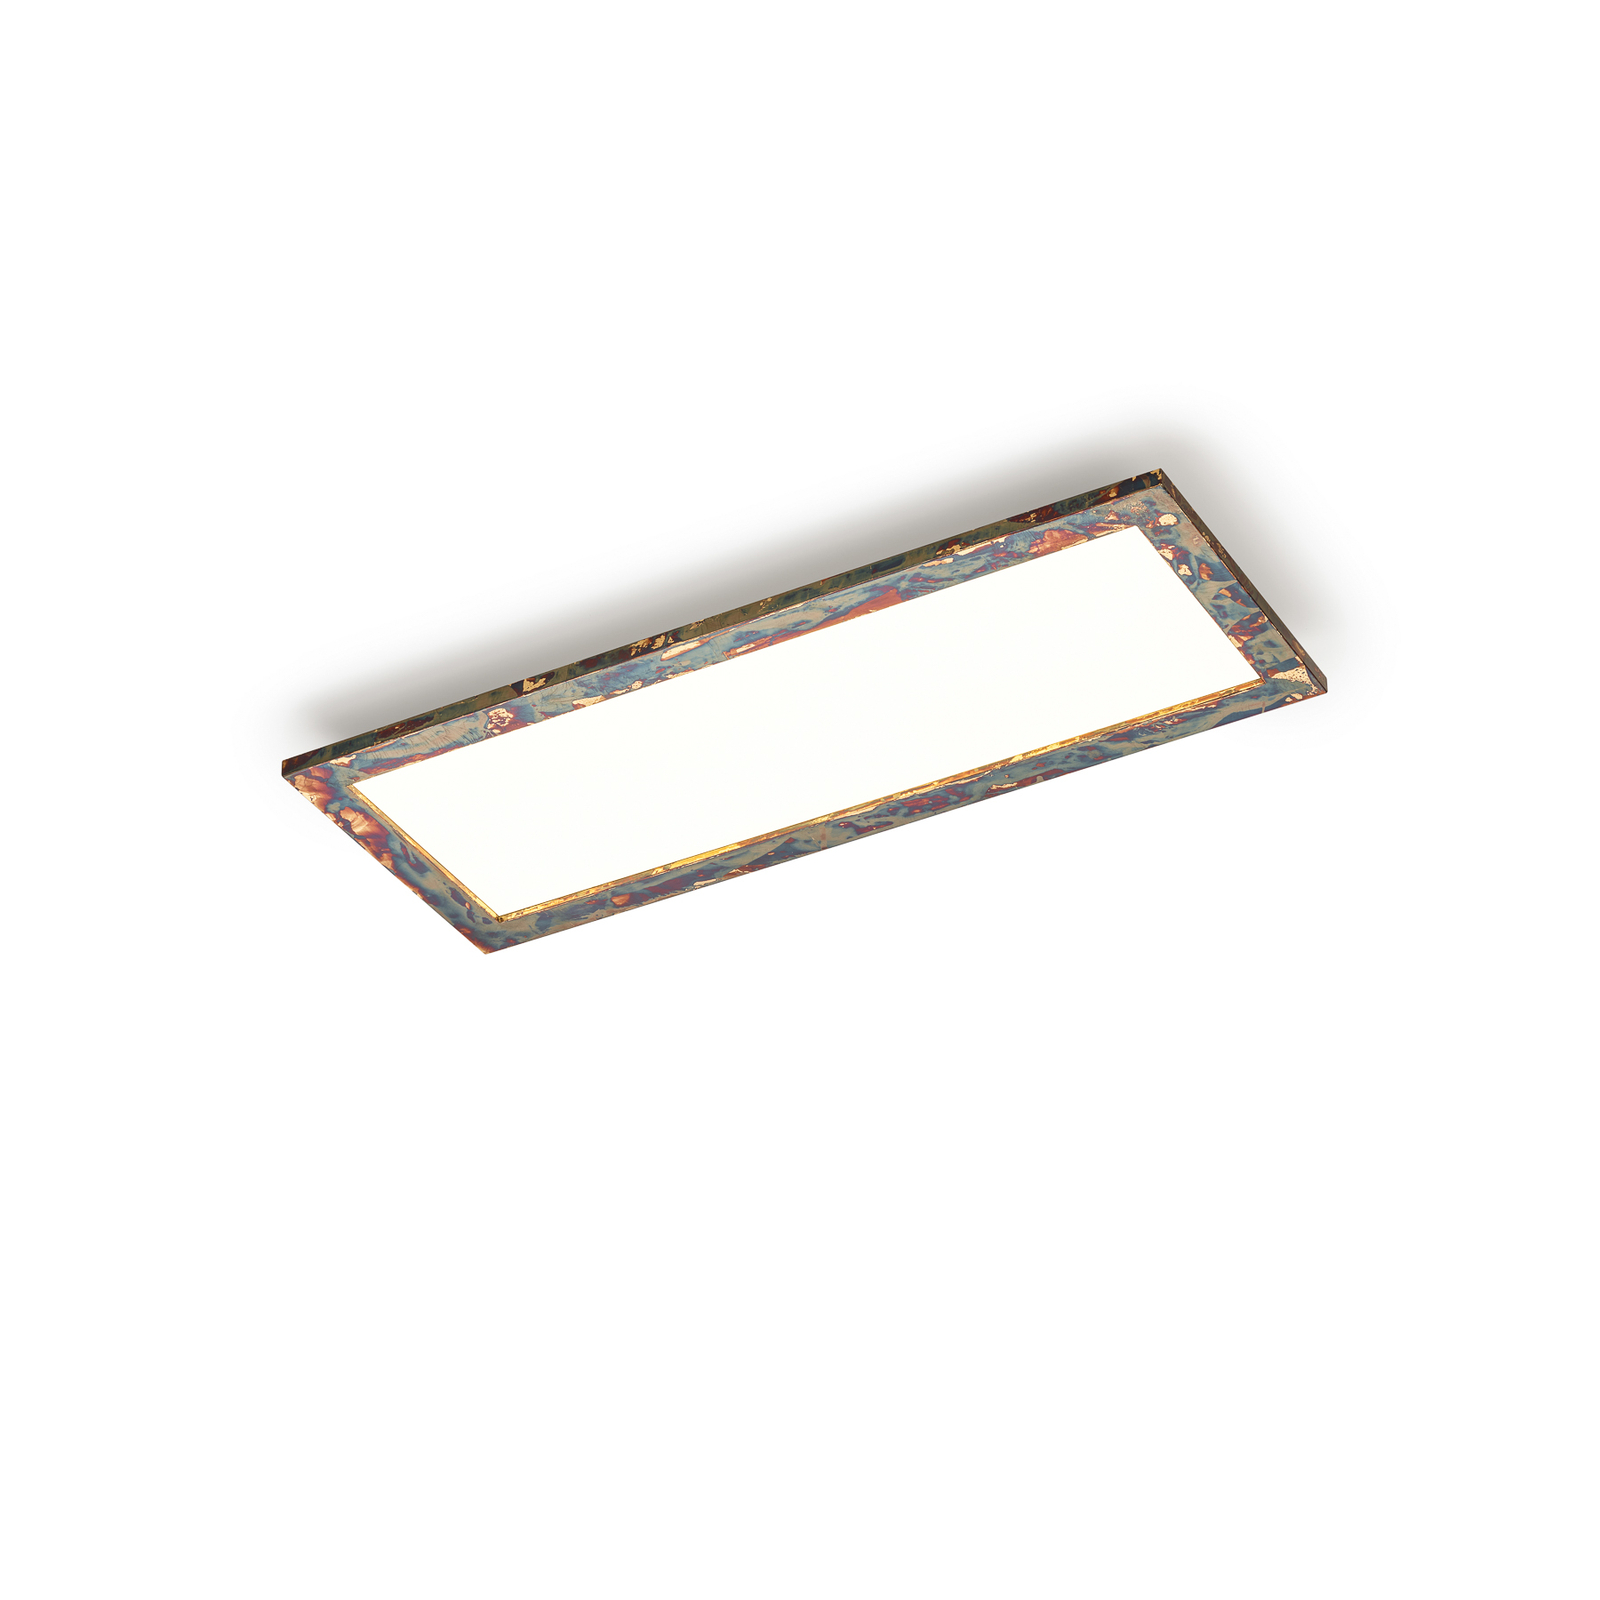 Quitani Aurinor LED panel, aranyszínű, 86 cm